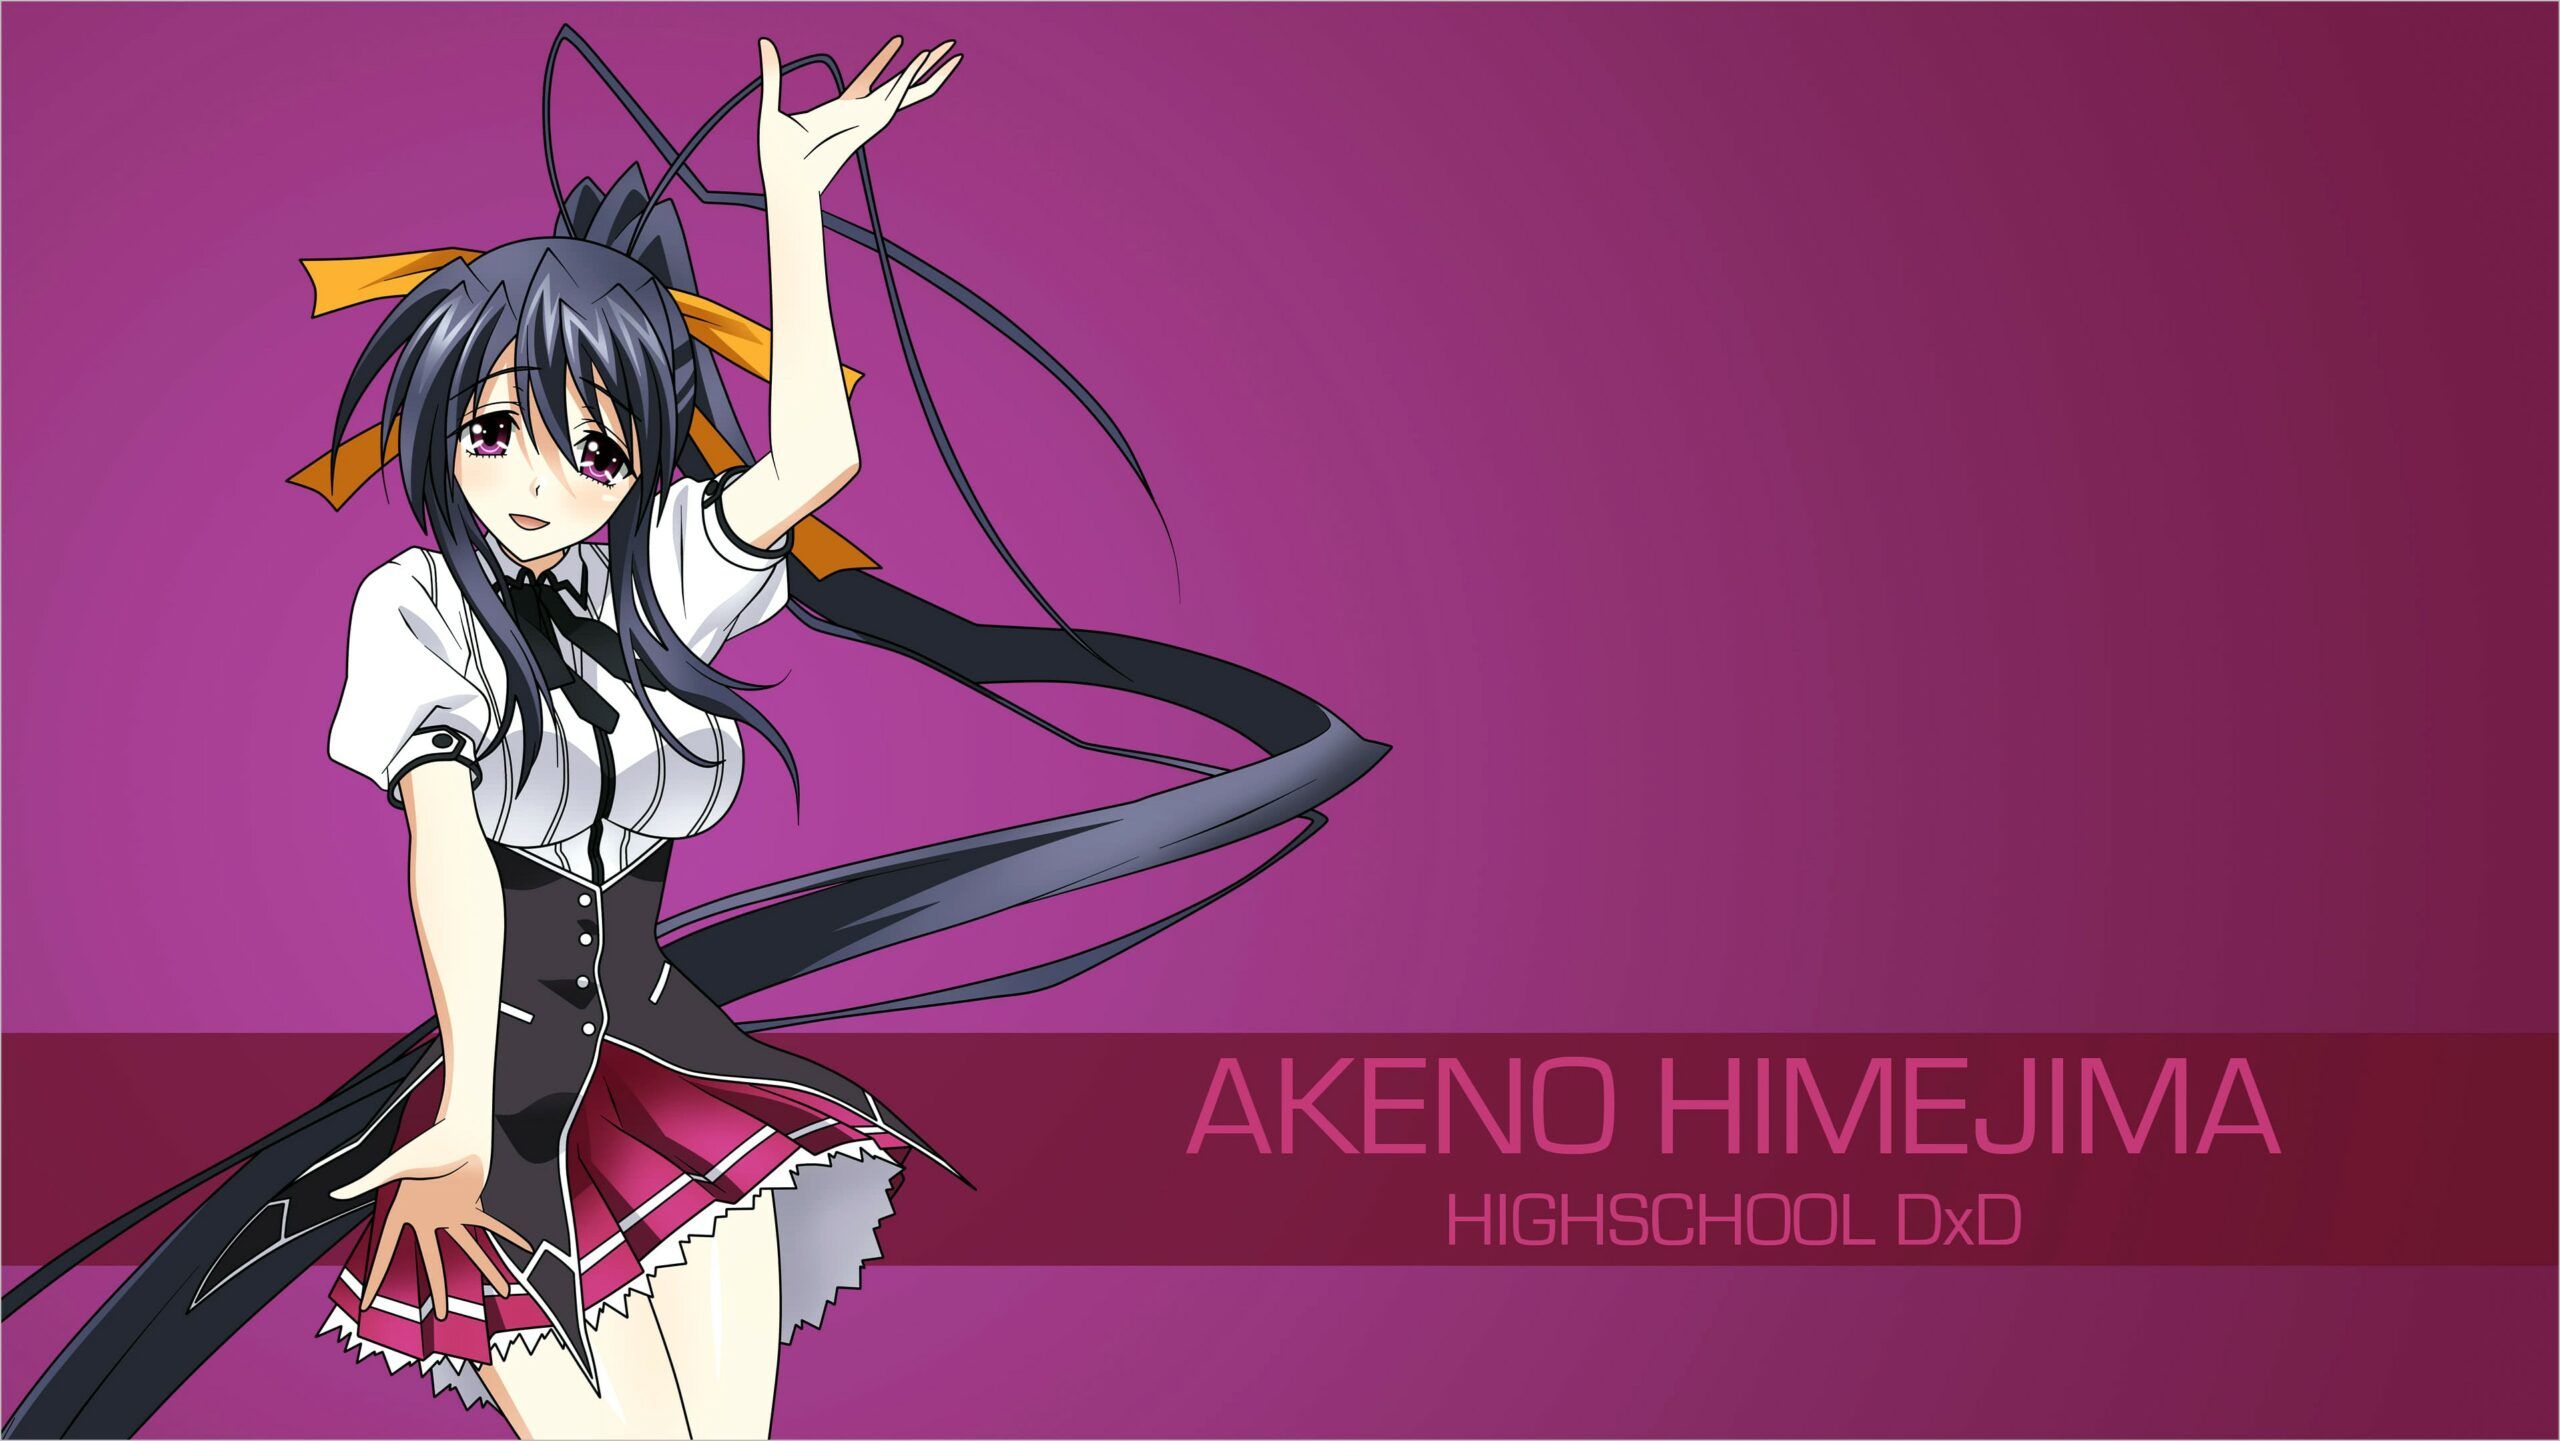 Akeno Himejima 4k Wallpaper. Highschool dxd, Dxd, Anime